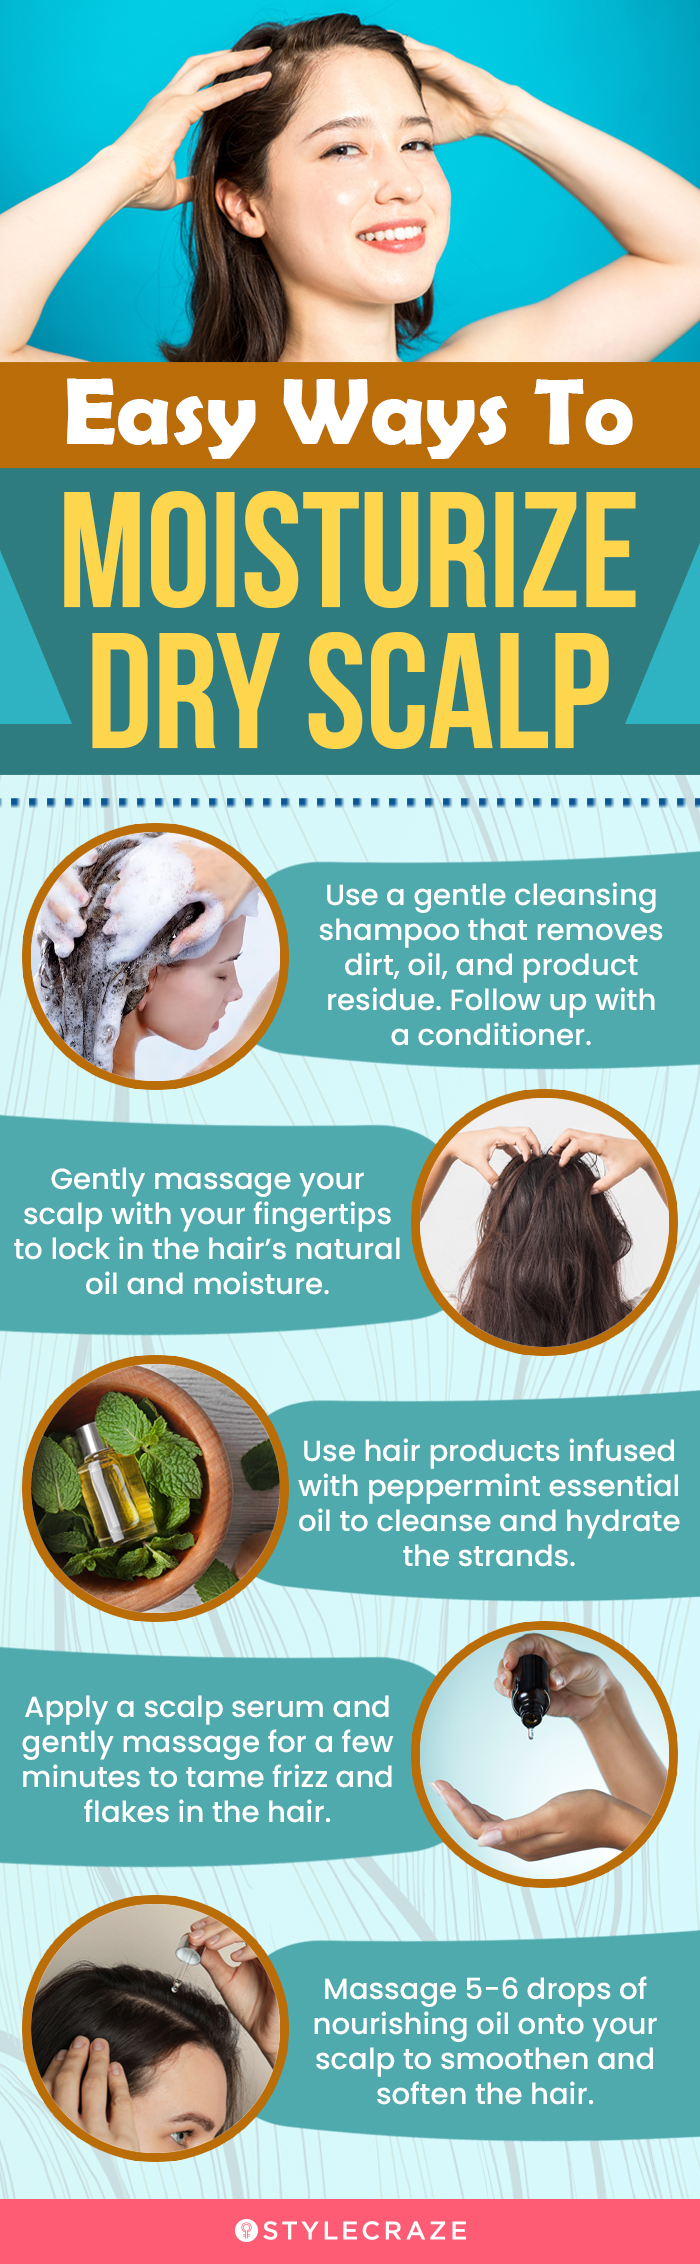 Easy Ways To Moisturize Dry Scalp (infographic)